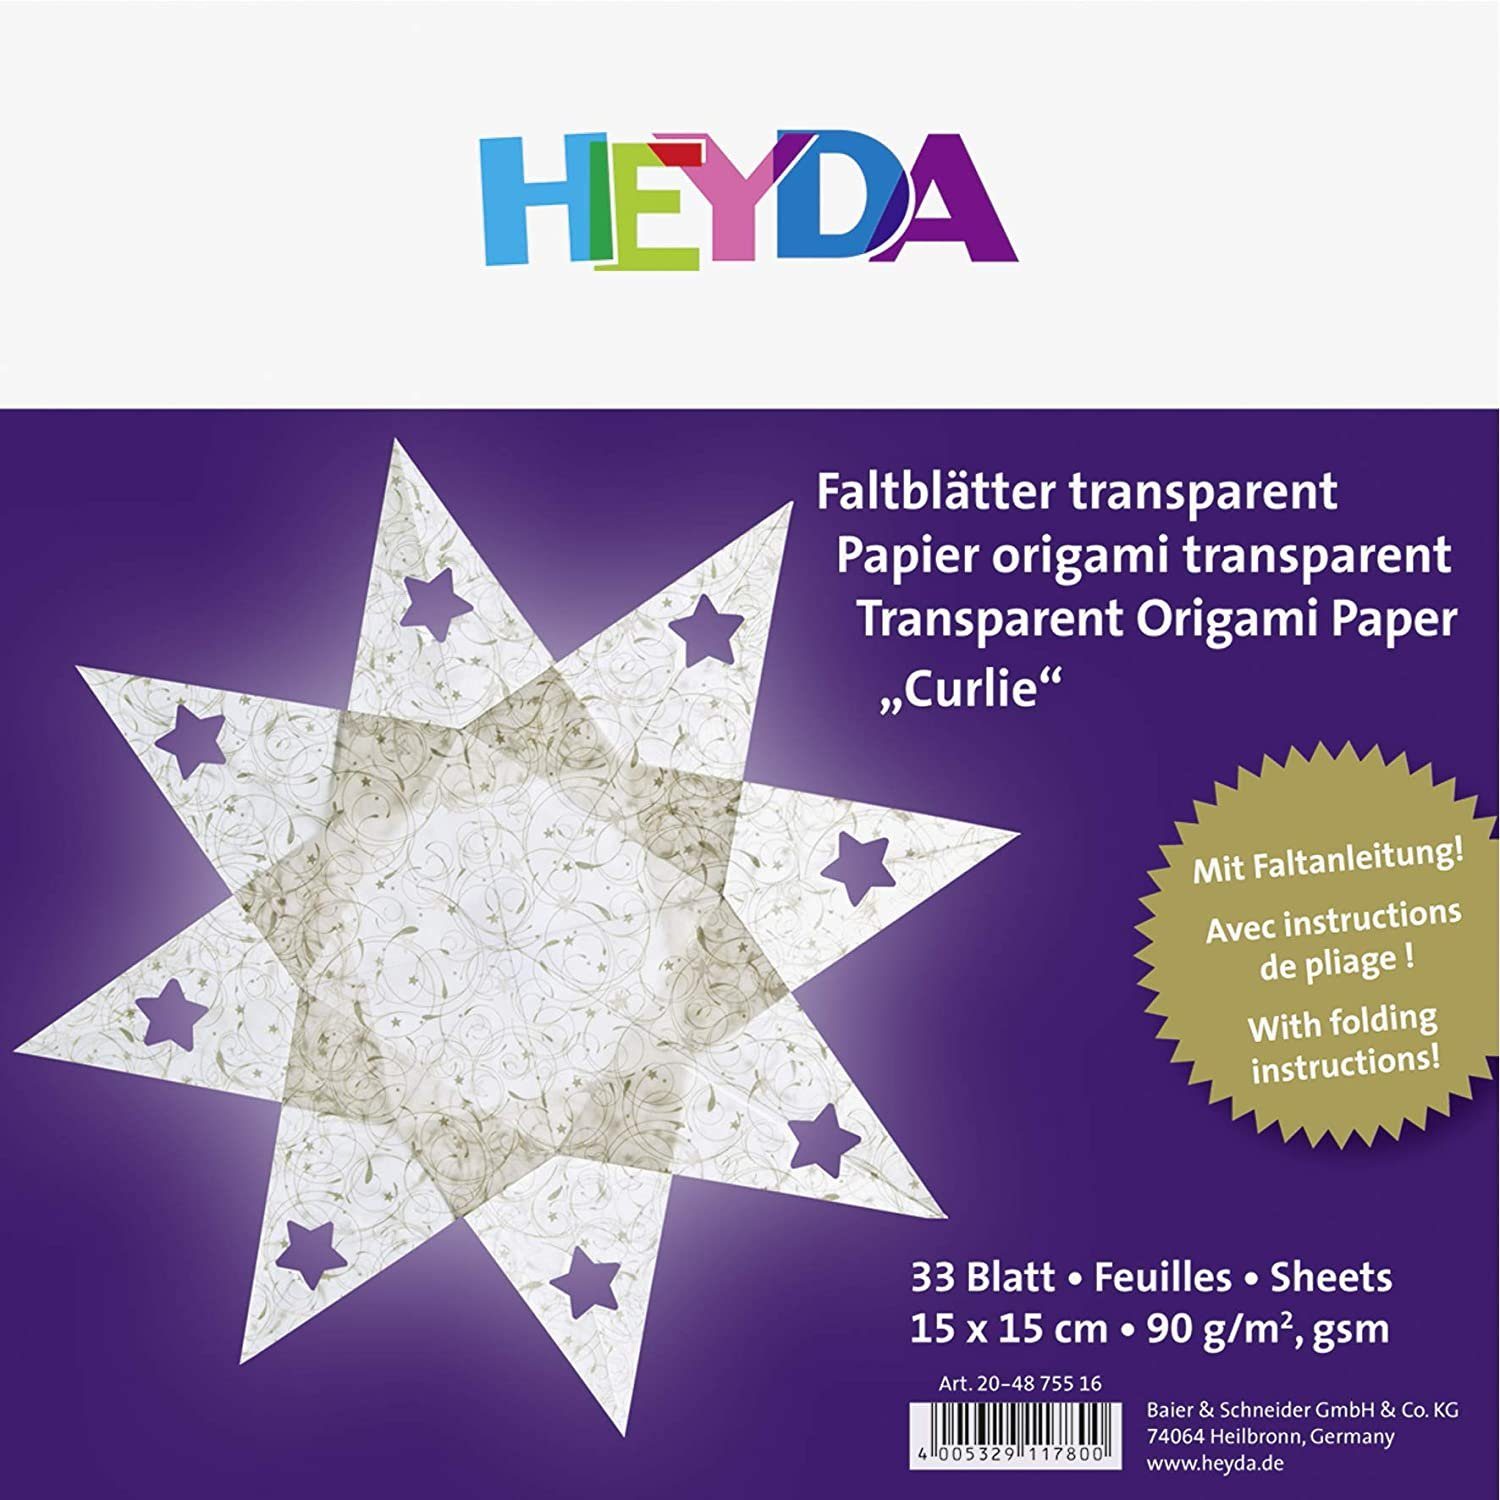 Heyda Bastelkartonpapier Origami transparent "Curlie gold" Faltblätter HEYDA